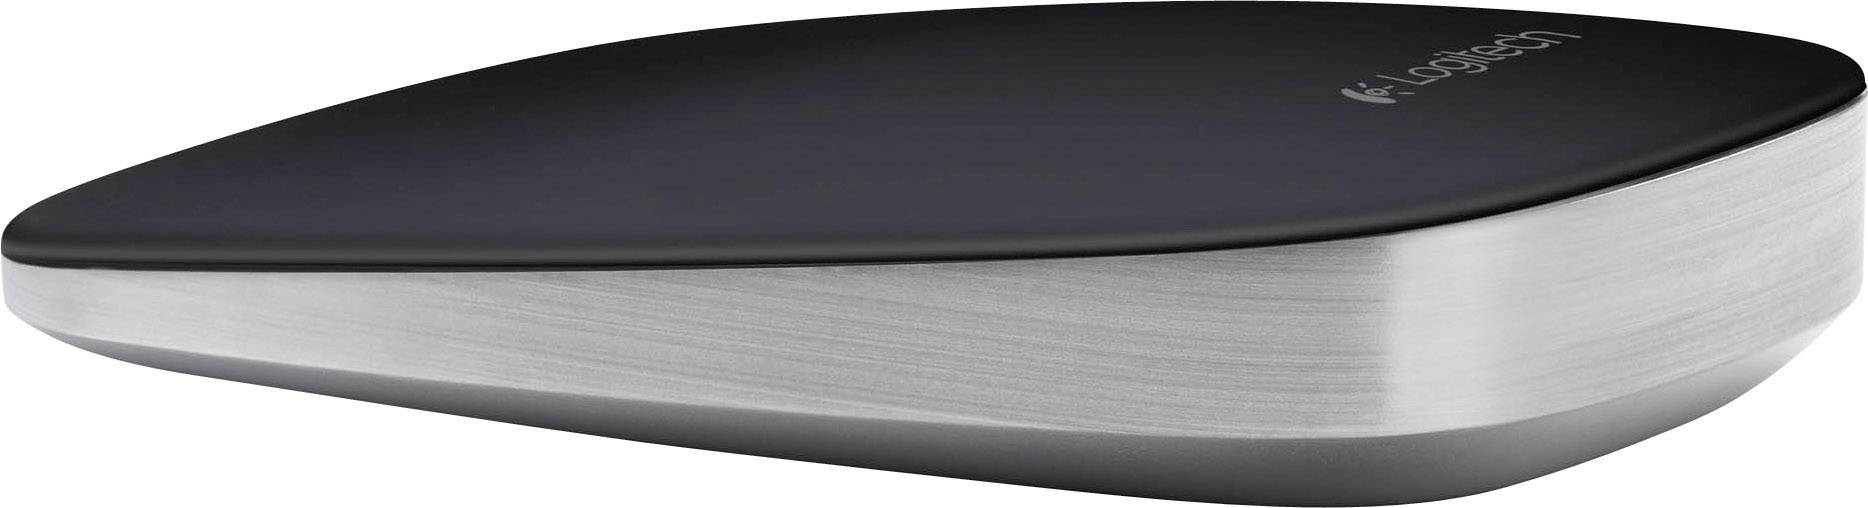 Logitech T630 Touch Mouse Mouse Bluetooth® Laser Black 1000 dpi Touch surface | Conrad.com